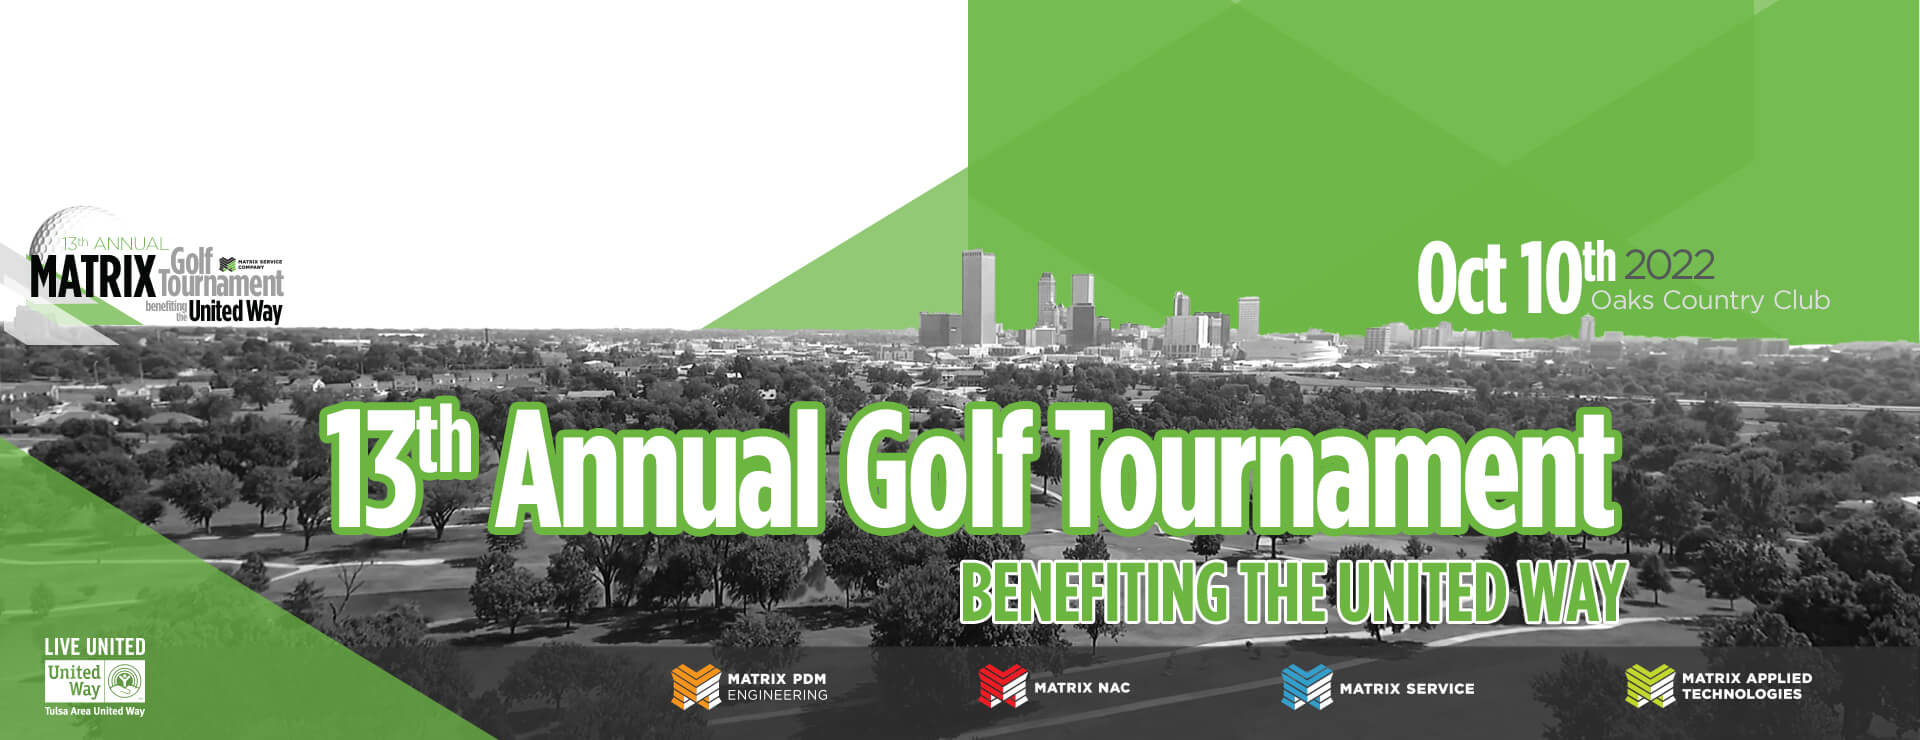 Matrix Golf Tournament benefitting the Tulsa Area United Way - Oct 10, 2022